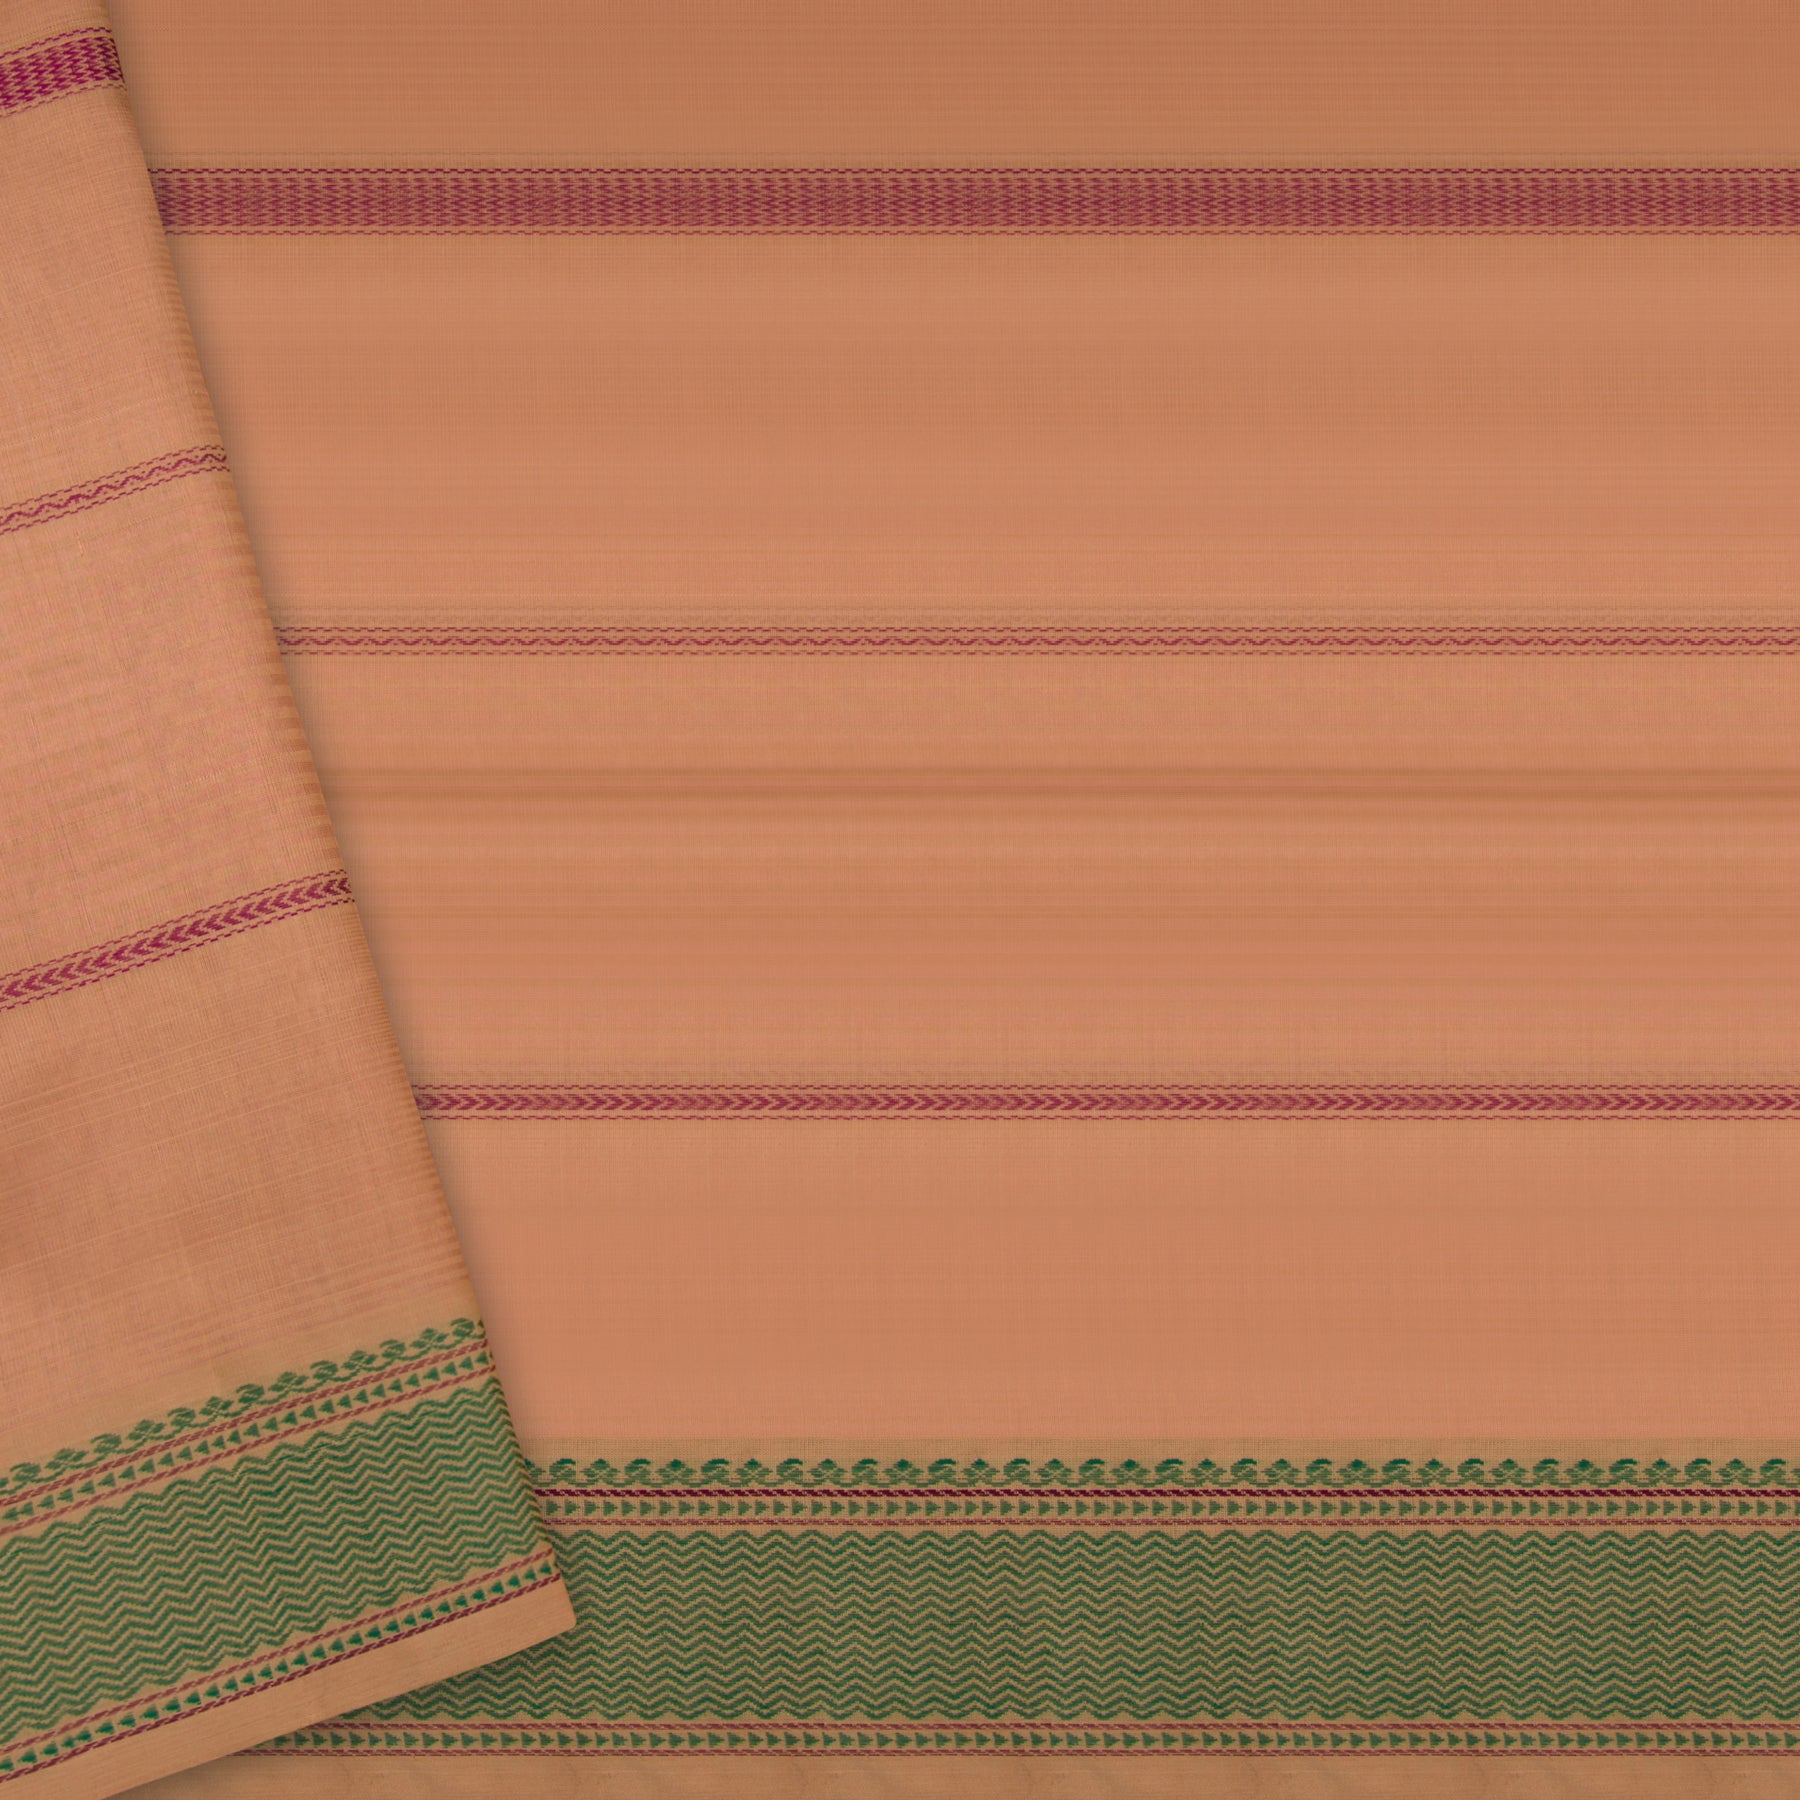 Kanakavalli Silk/Cotton Sari 22-598-hs005-13690 - Blouse View